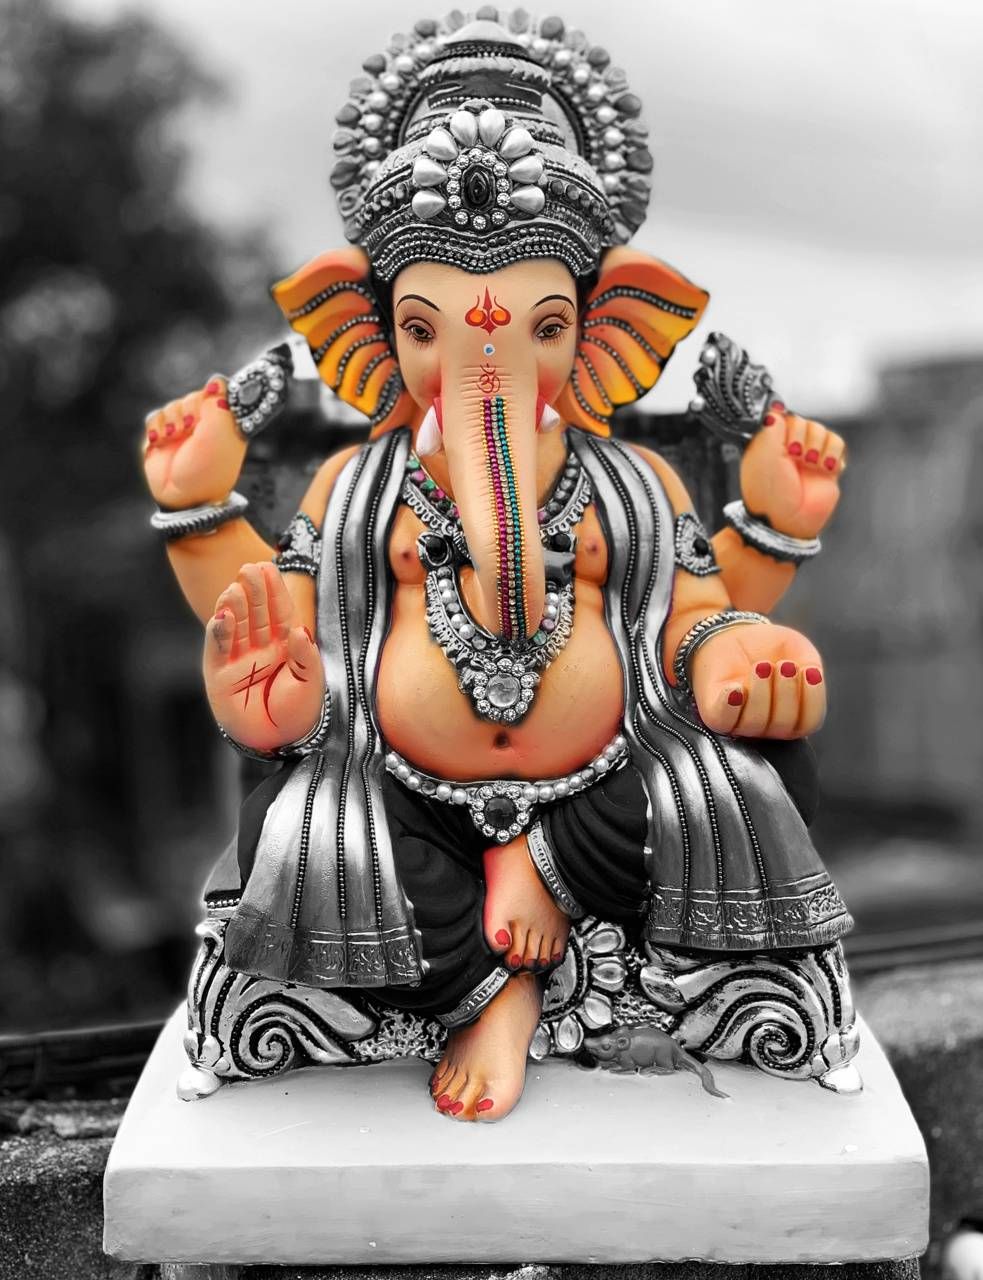  Ganesha Mobile iPhone Wallpaper Photo HD Download  MyGodImages